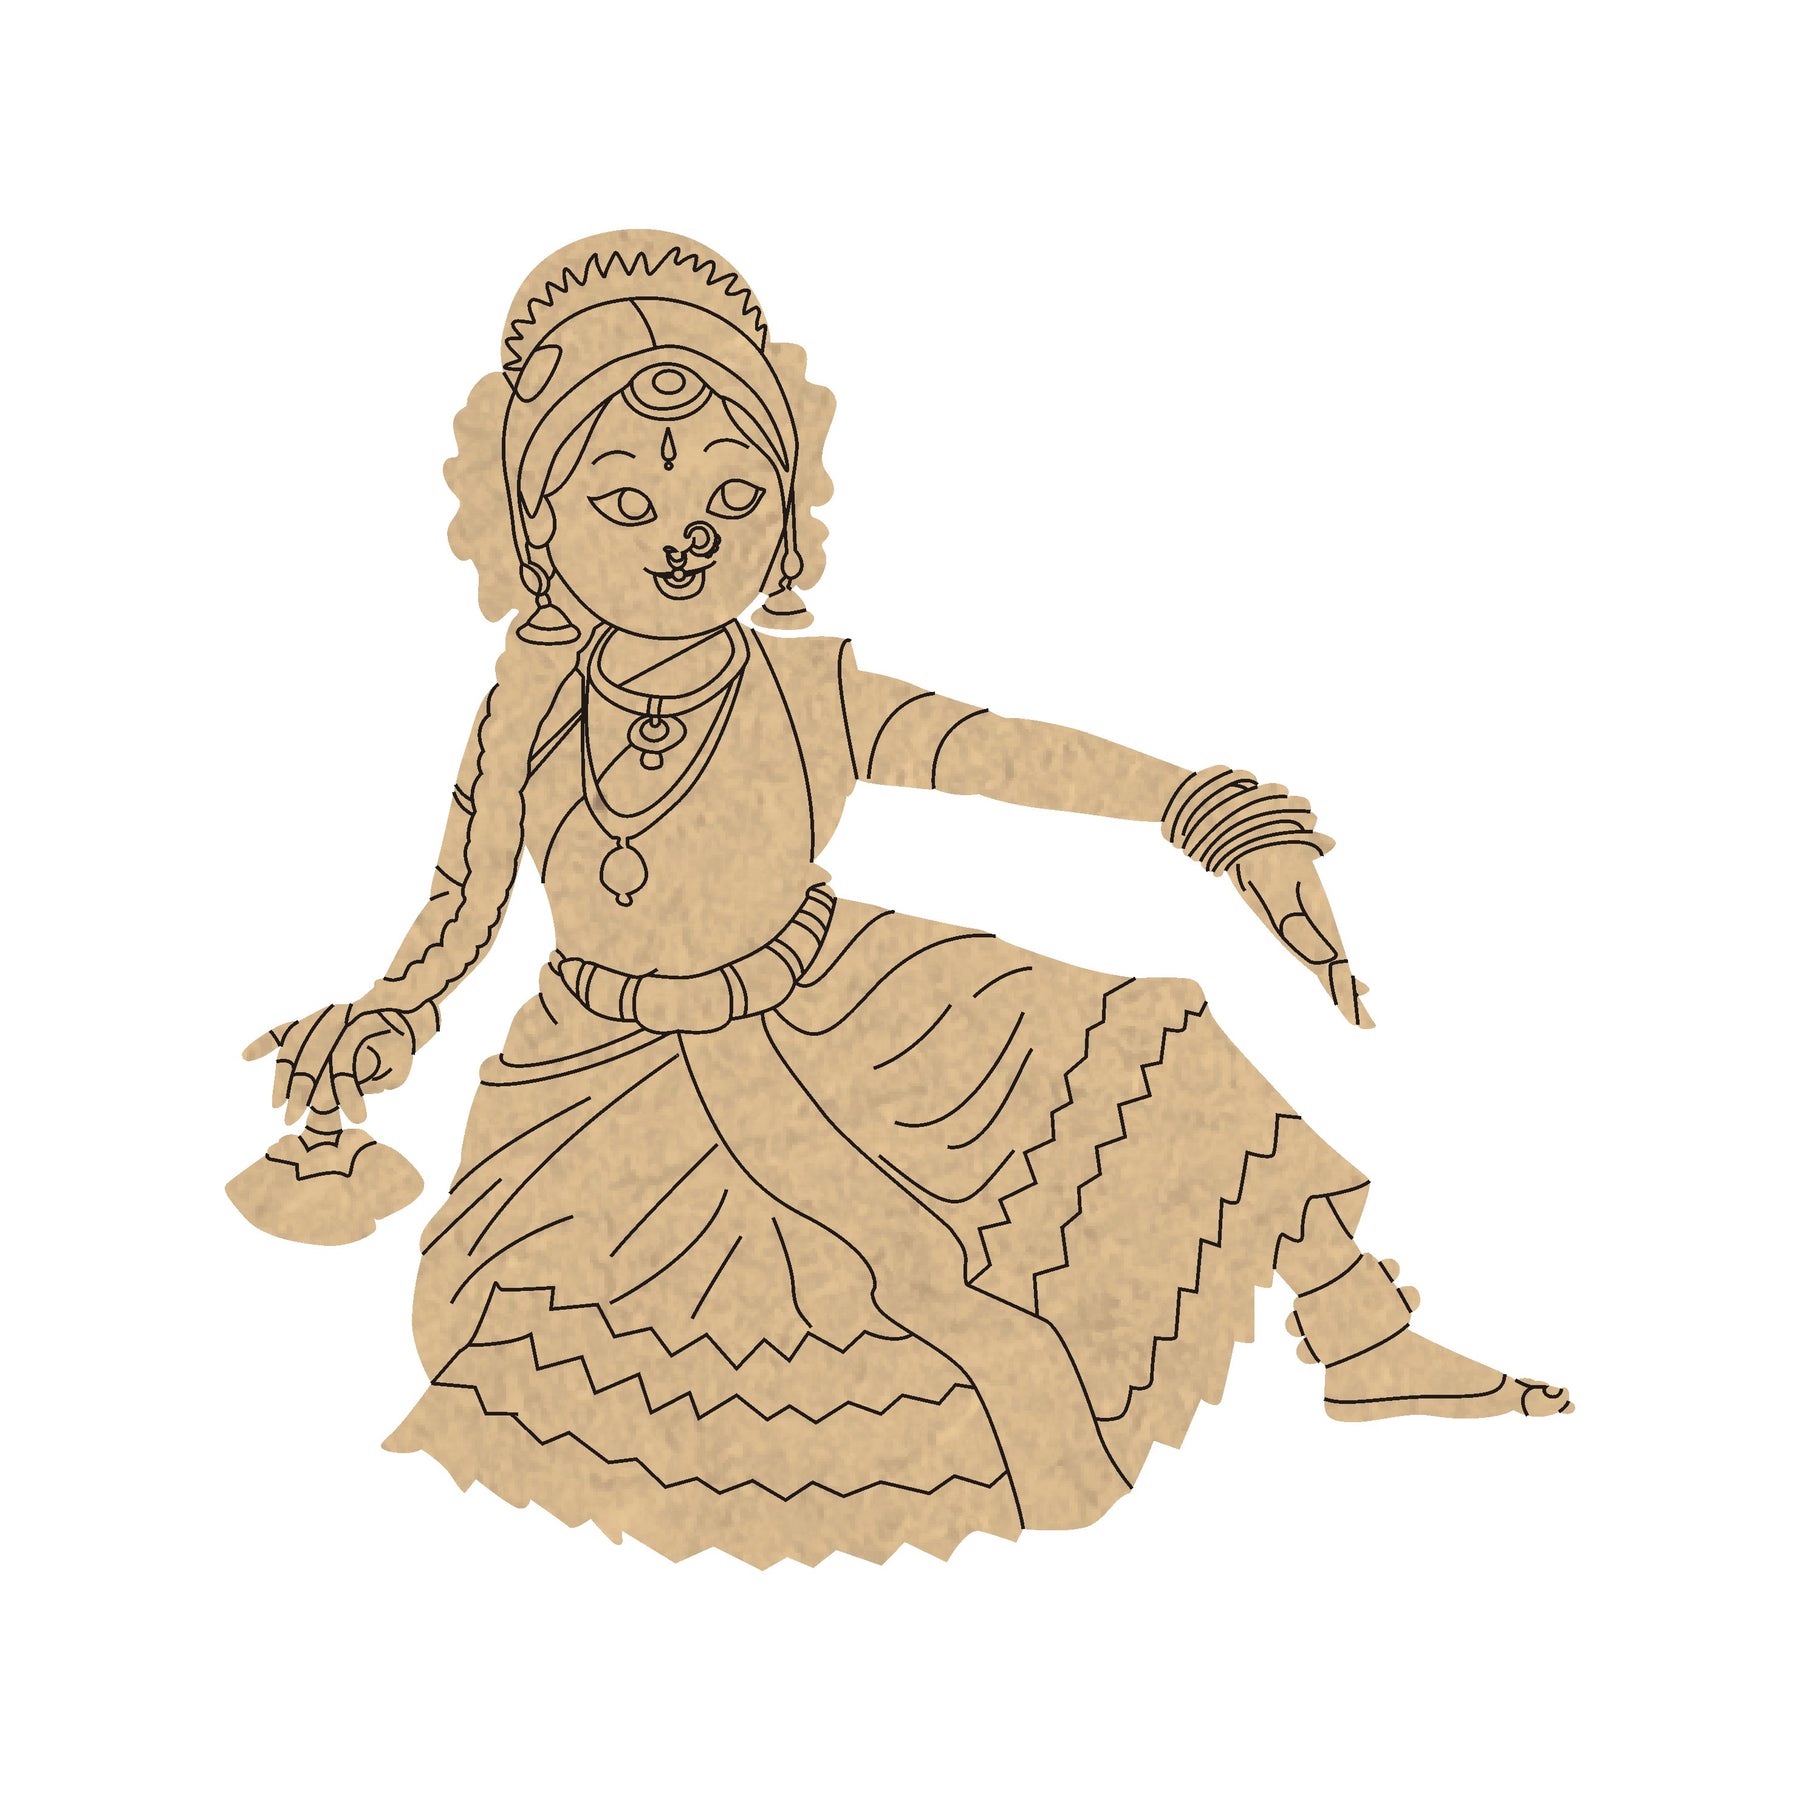 BHARATNATYAM, Attractive Indian dance pose poster, Indian classical dancer  girl, modern print glamour room decor - AliExpress